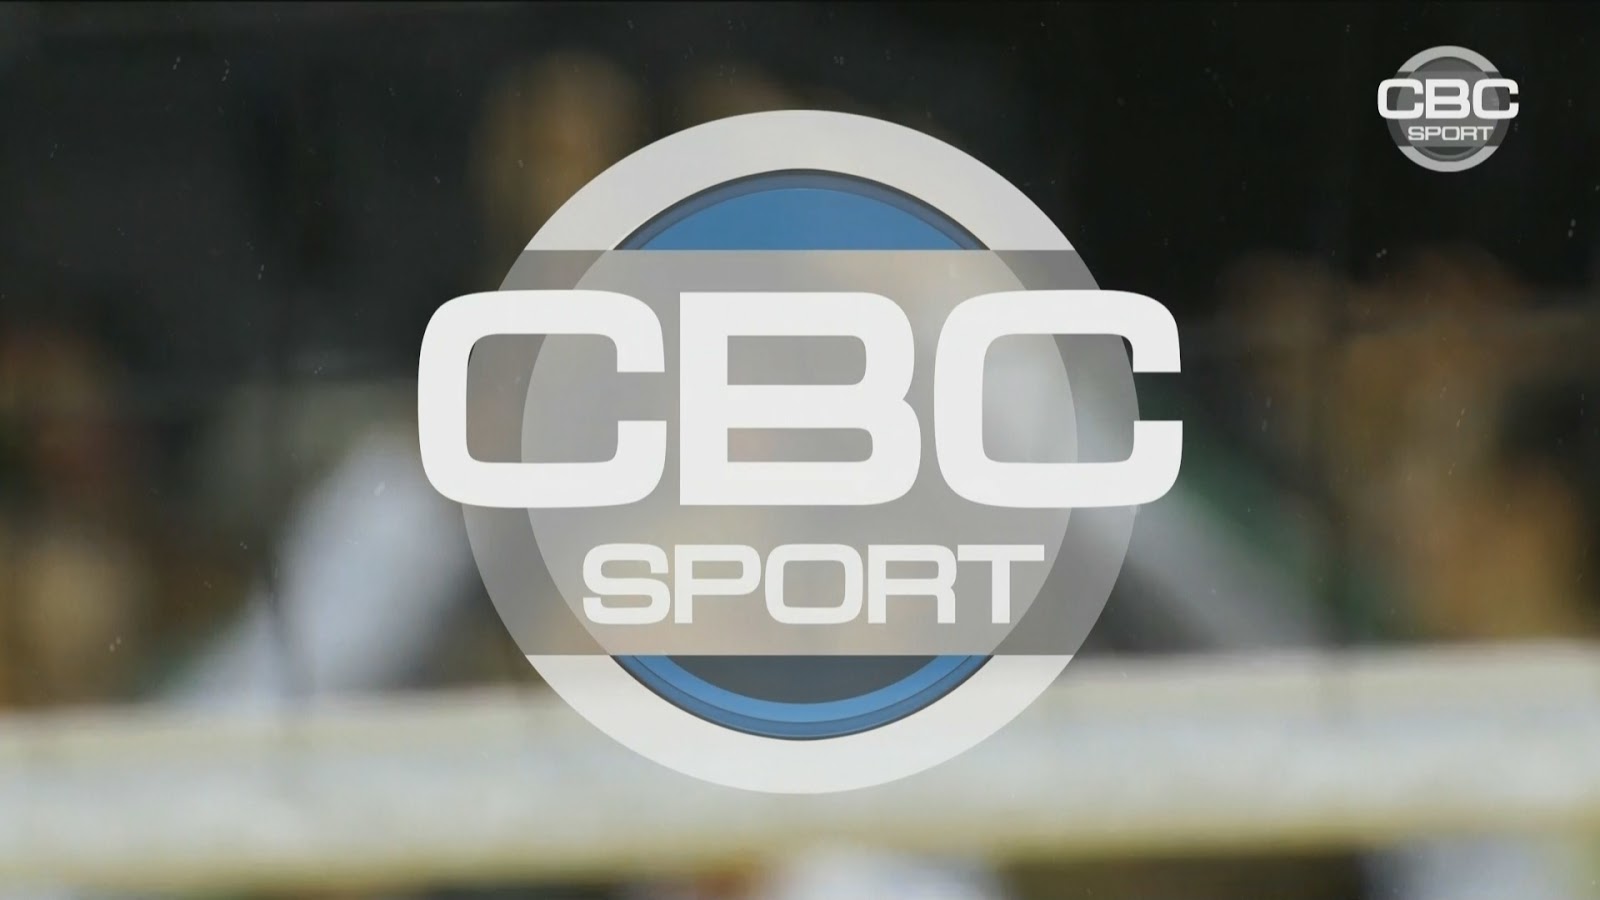 Cbc sport azerbaycan kesintisiz canli